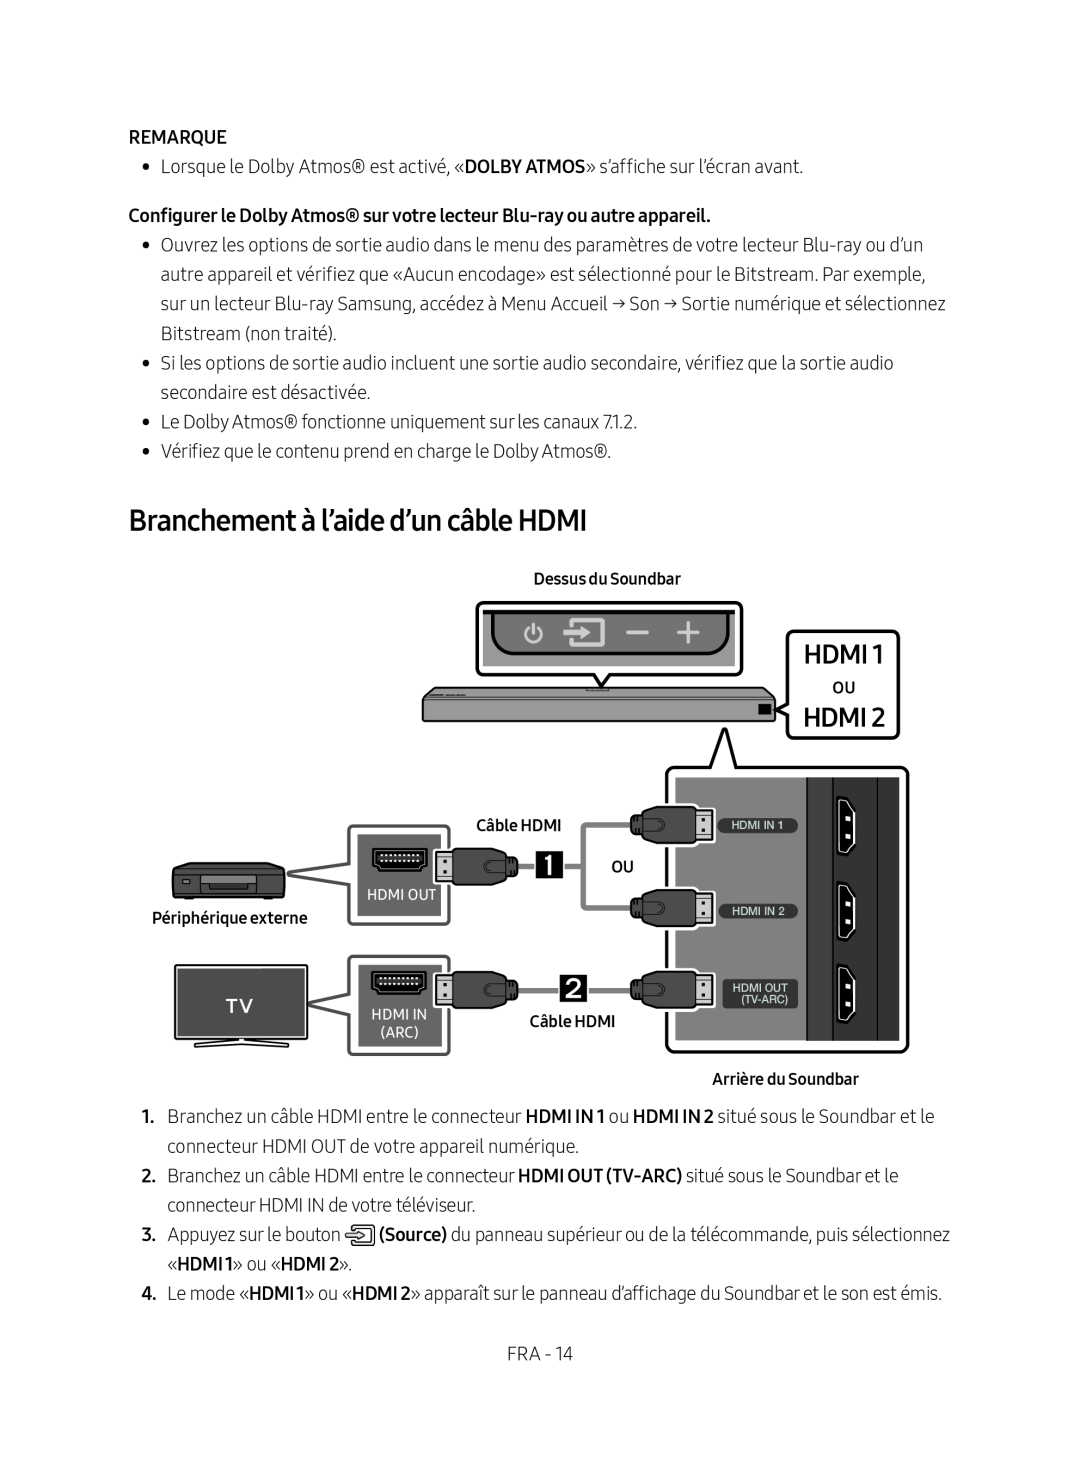 Branchement à l’aide d’un câble HDMI Dolby Atmos HW-N850